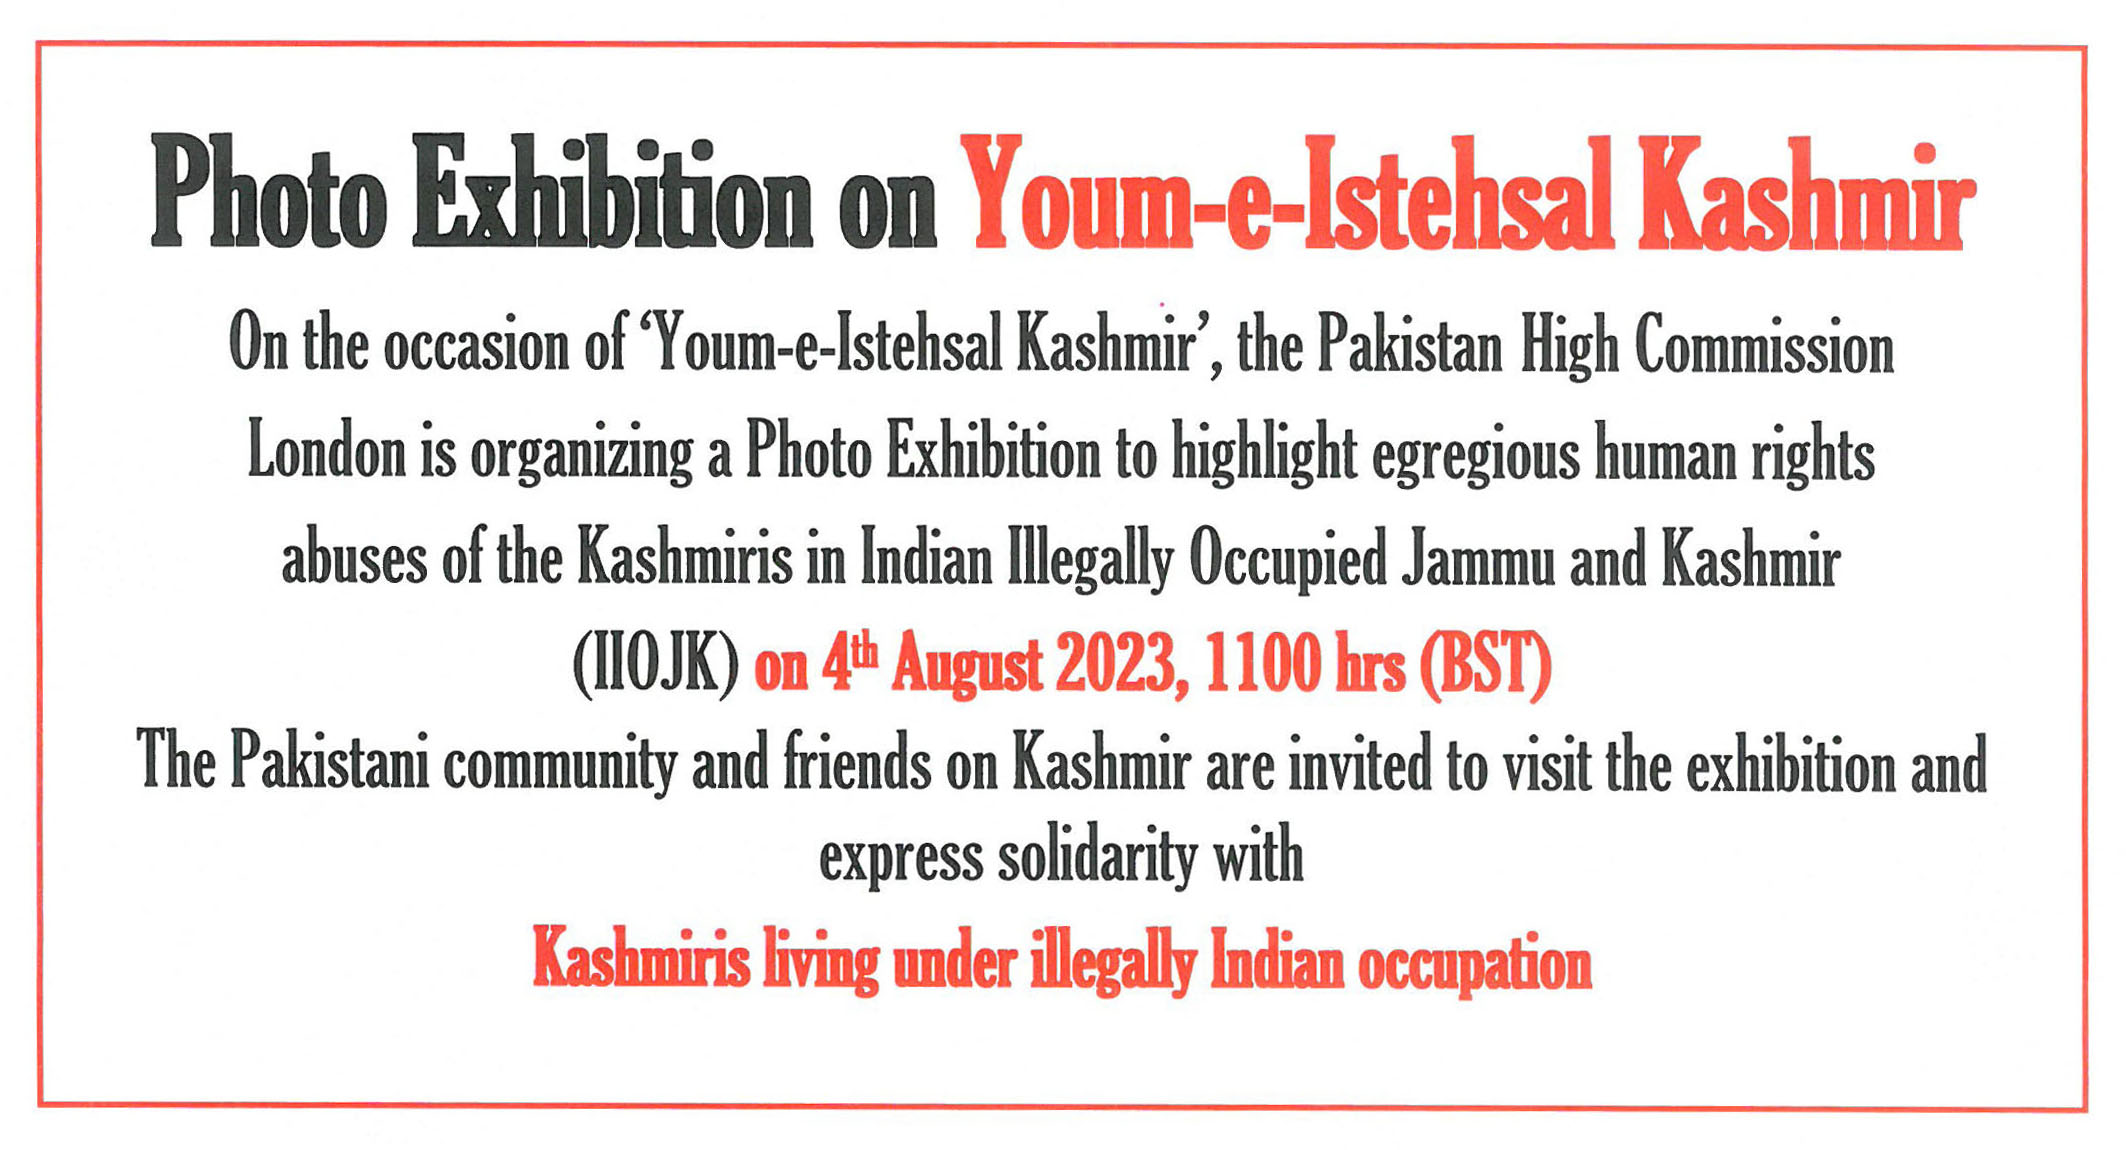 Photo Exhibition on Youm-e-Istehsal Kashmir